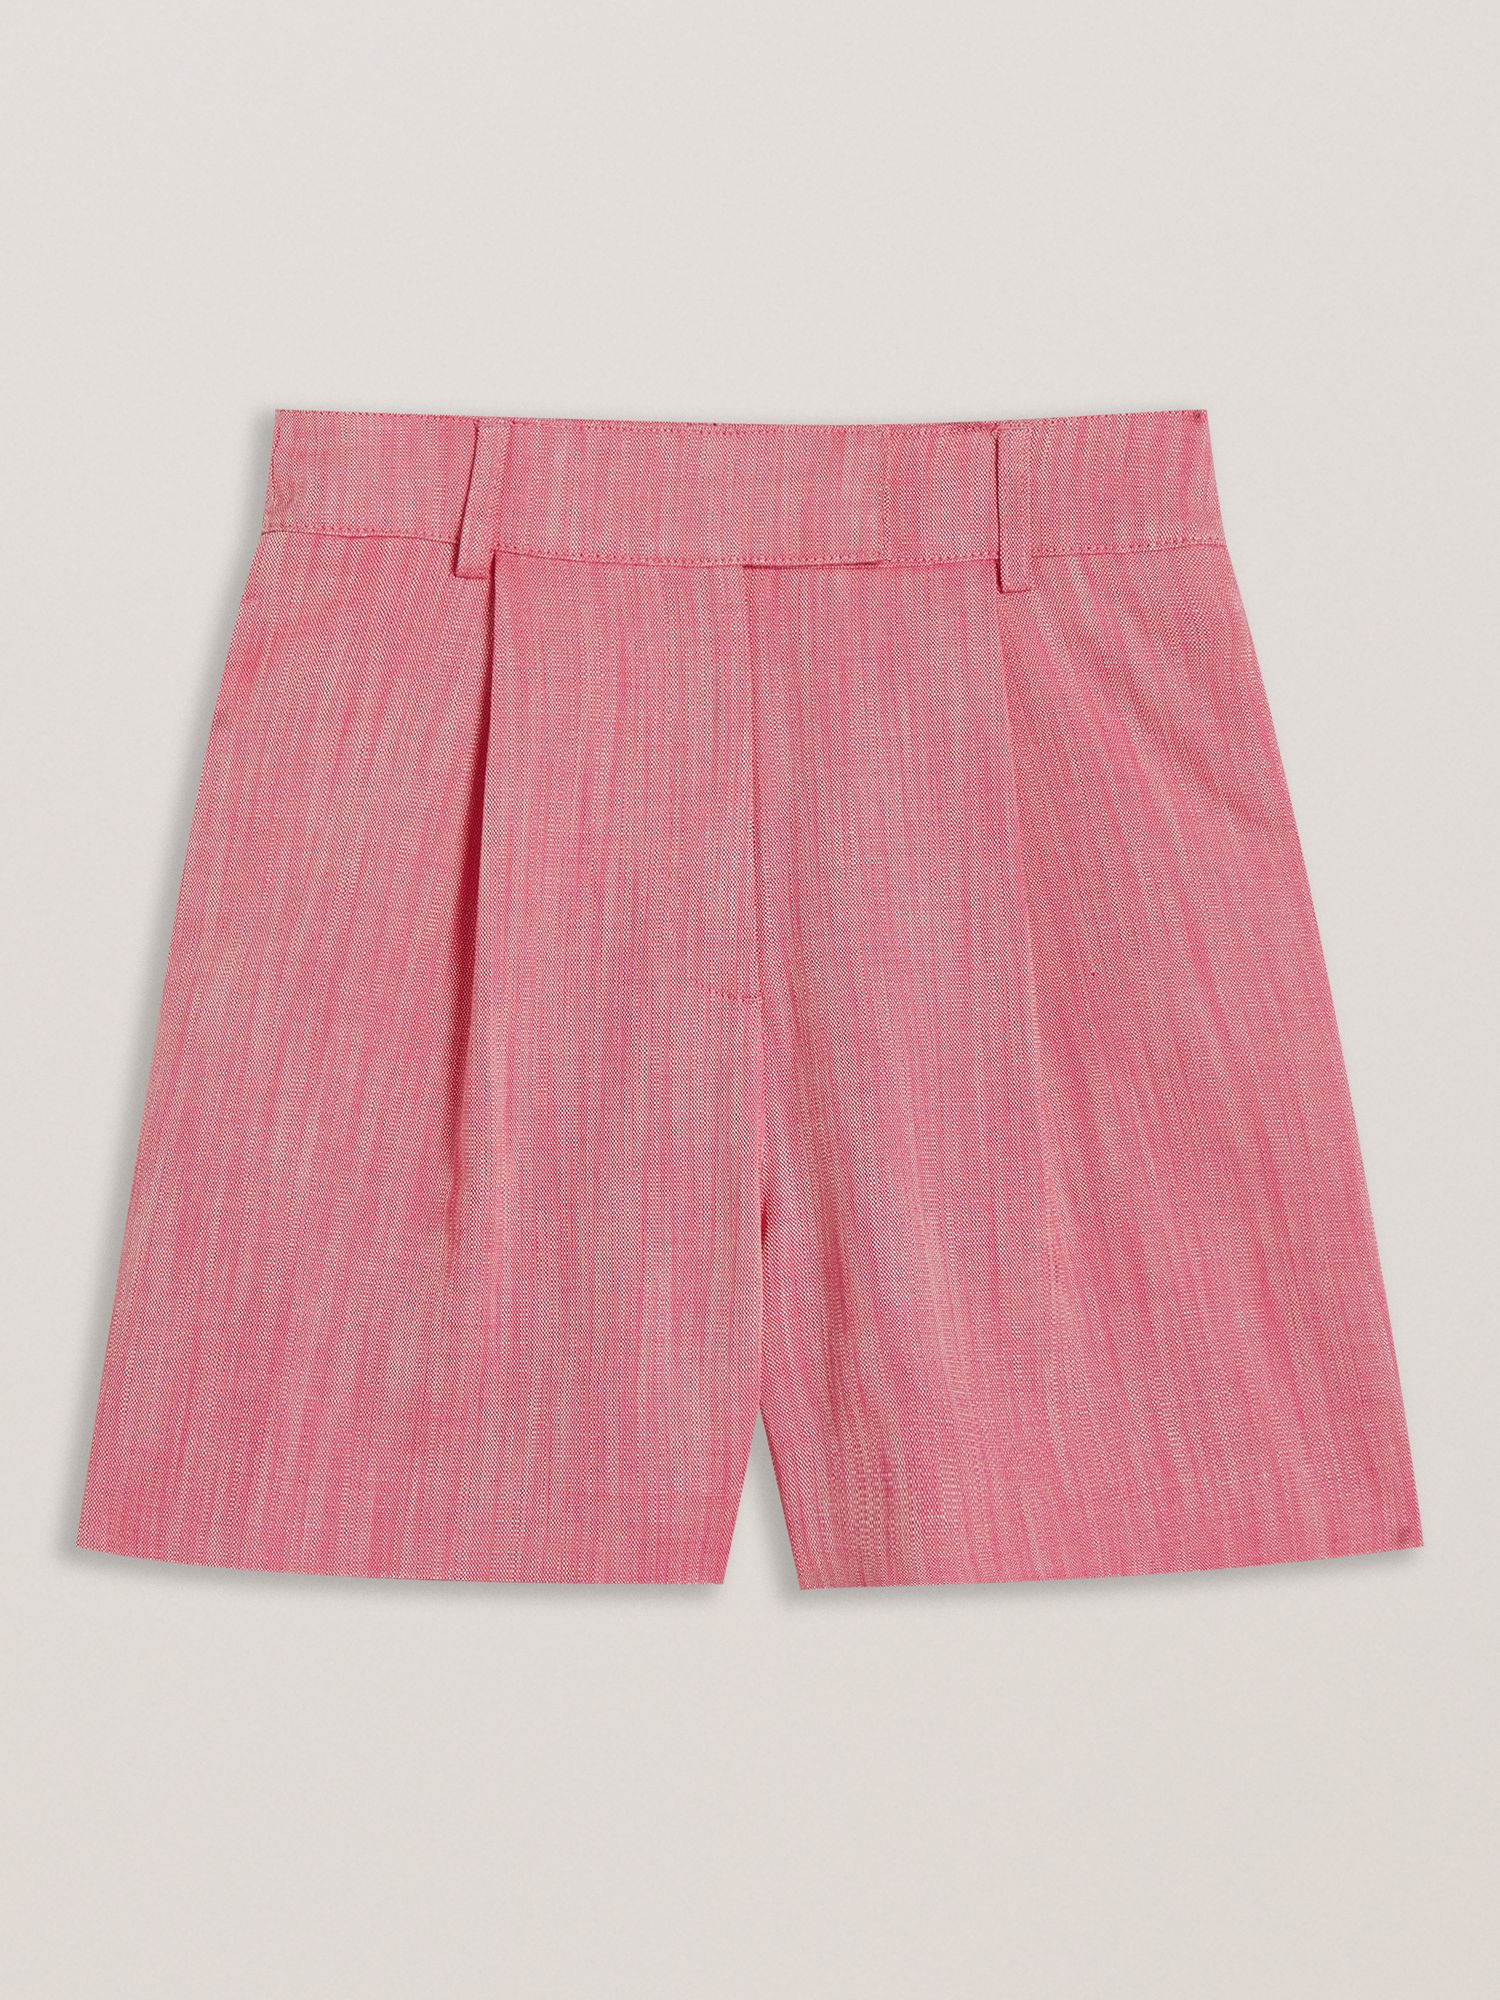 Ted Baker Hirokos Tailored Shorts, Pink Light, 8